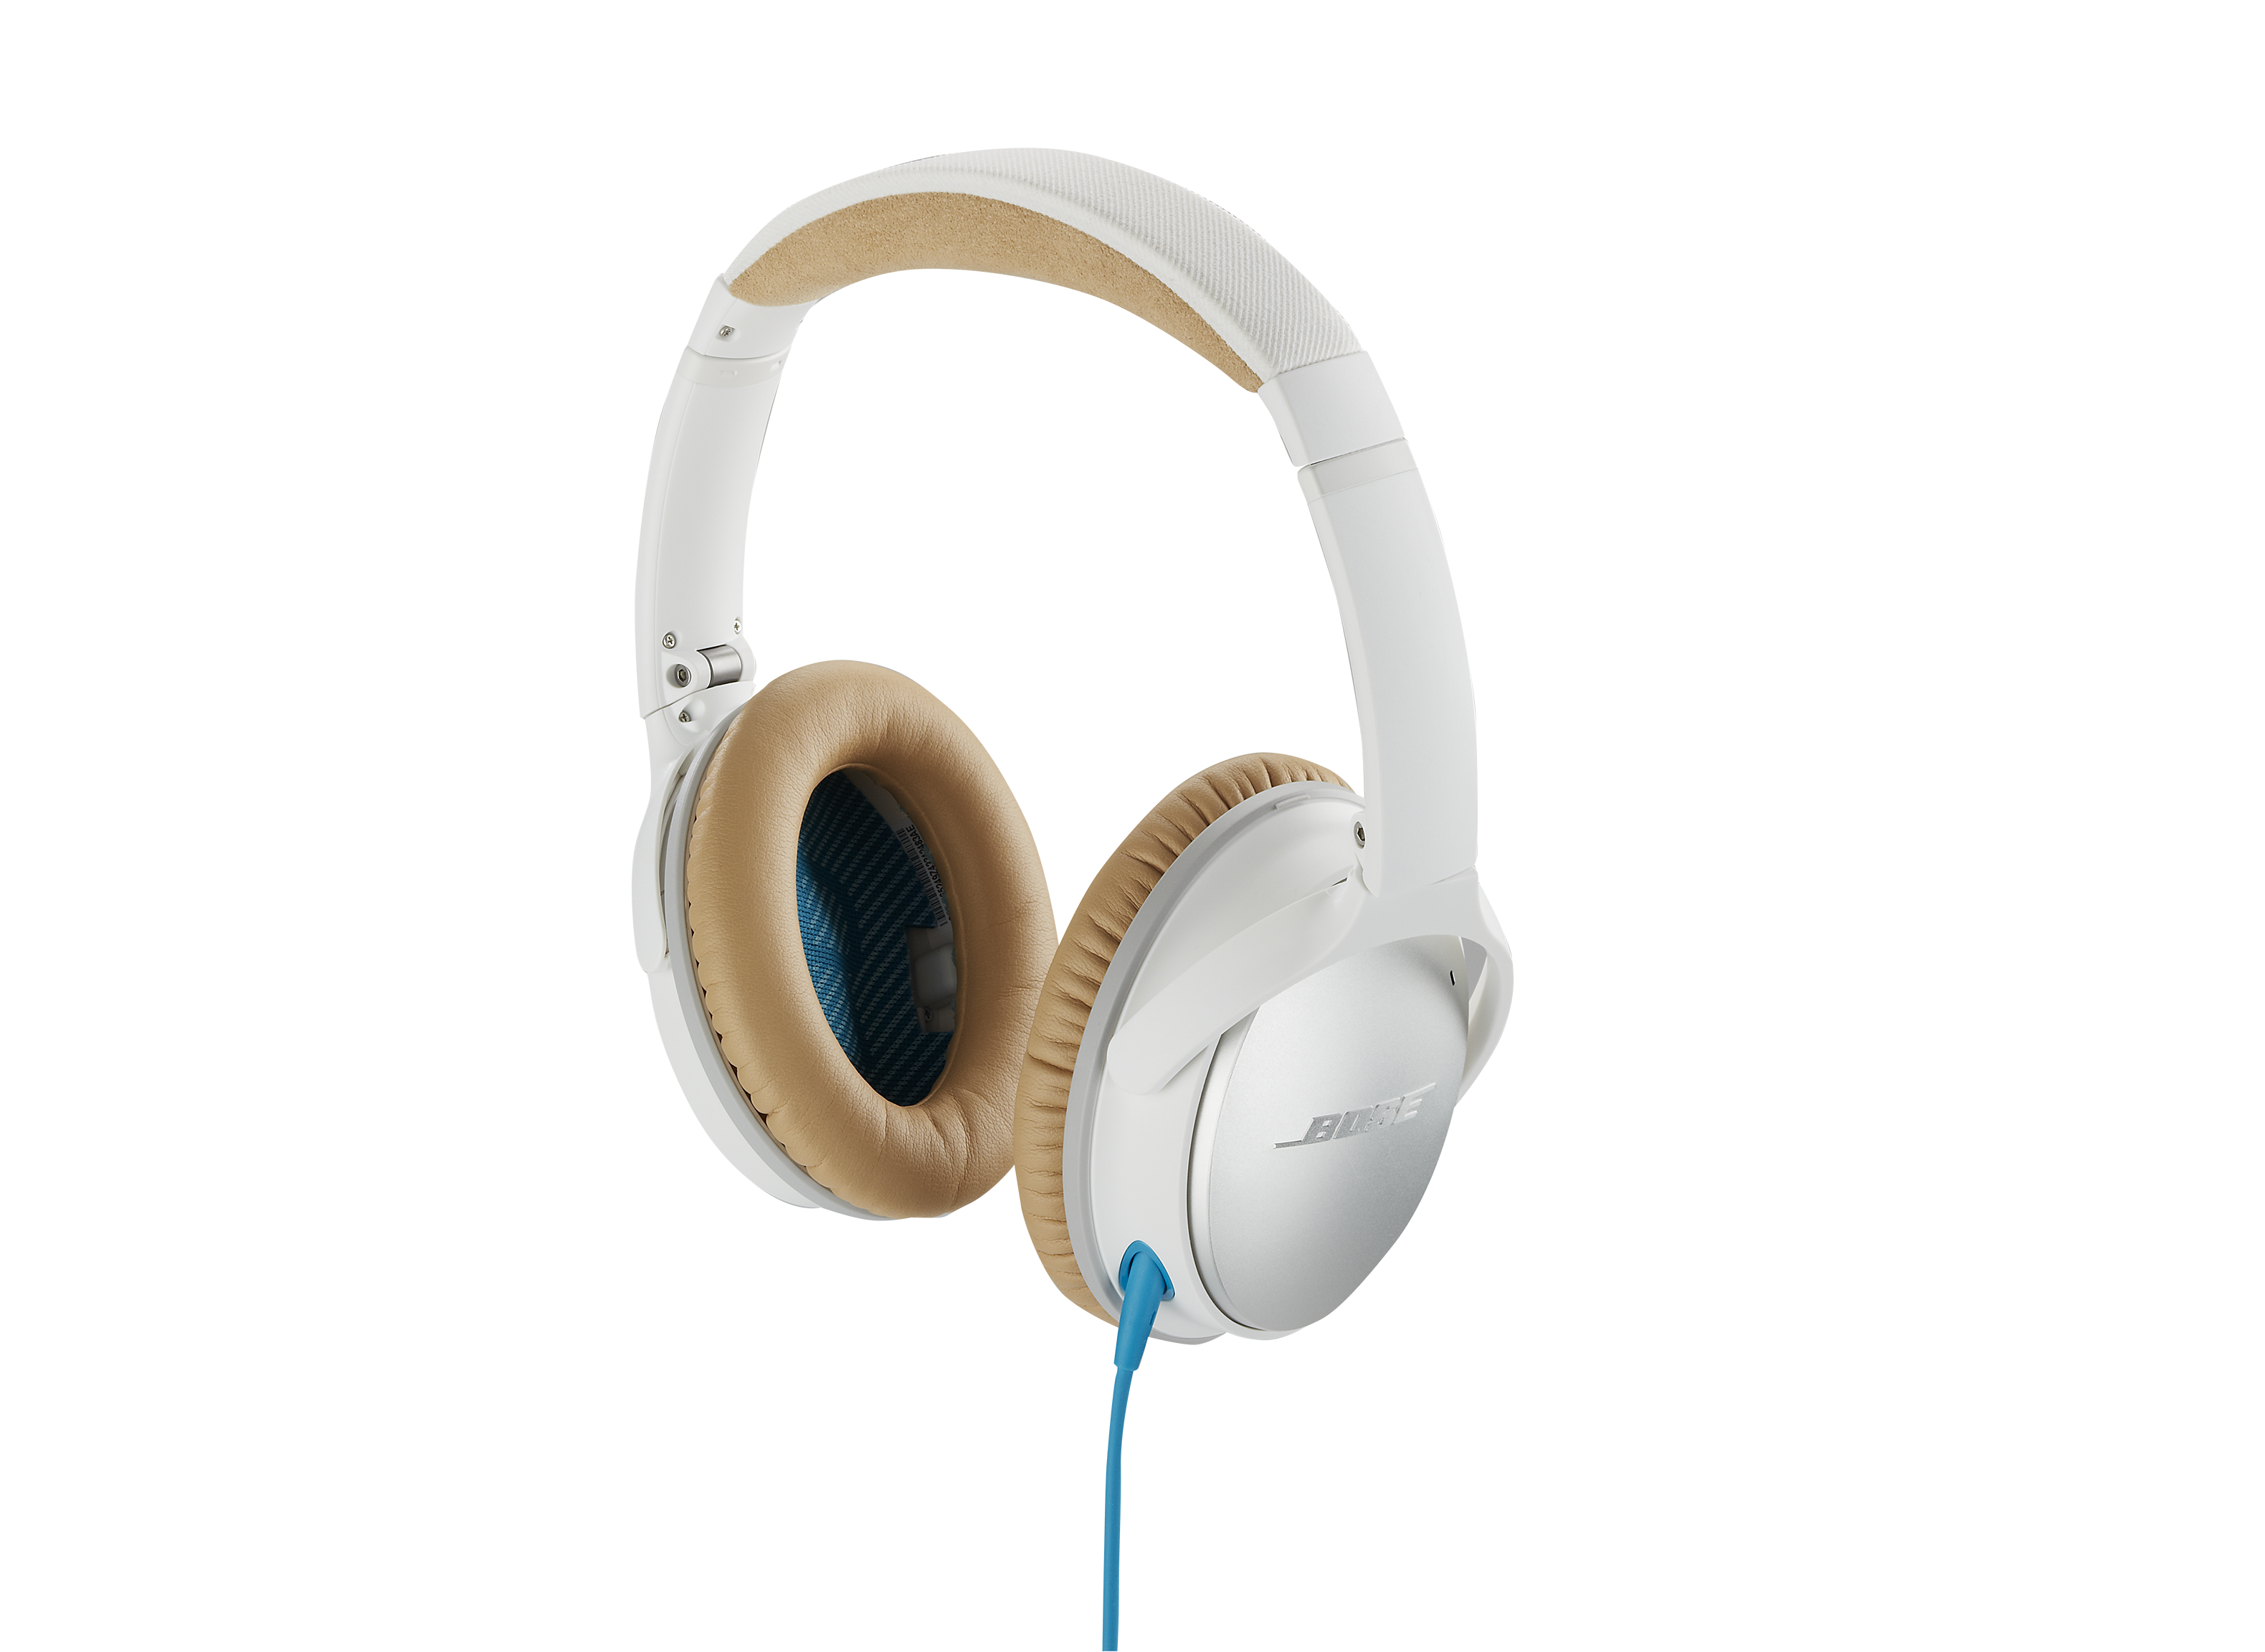 Bose QuietComfort 25 Headphone Review - Consumer Reports